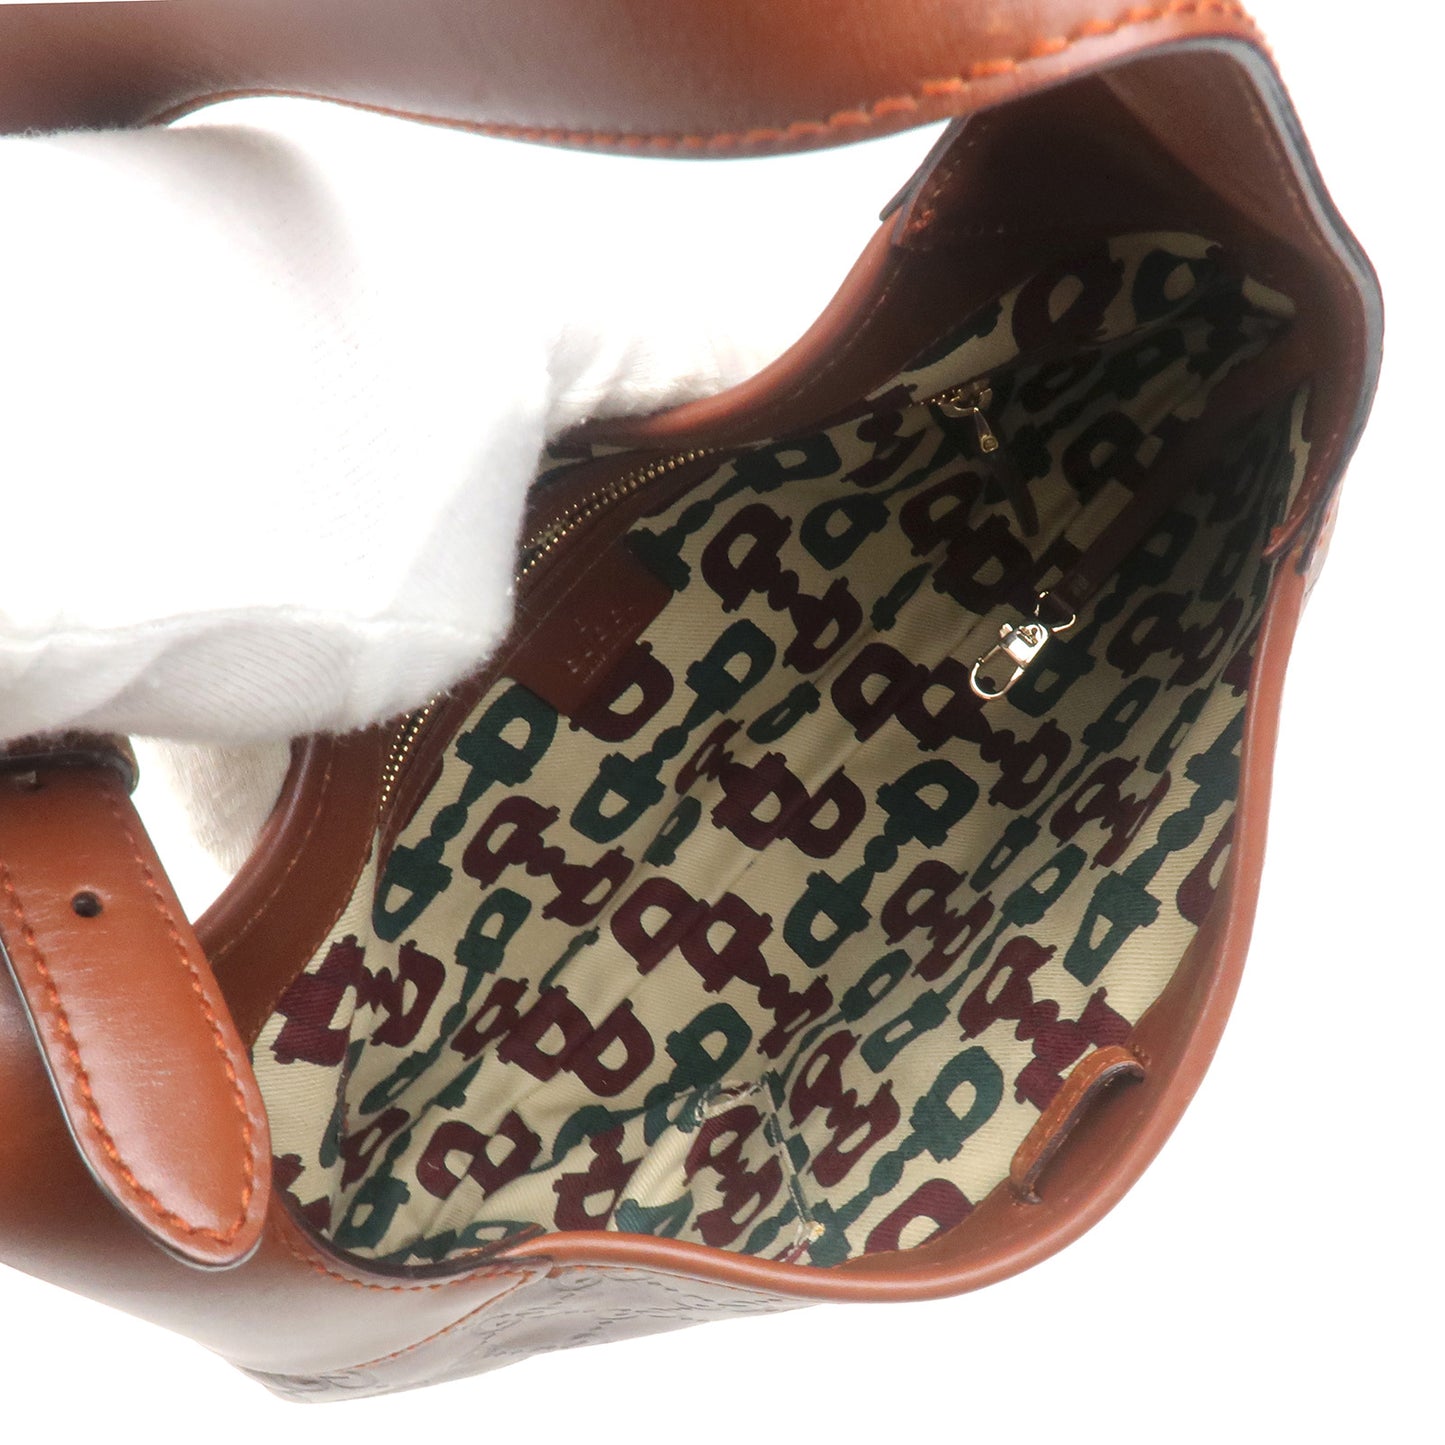 GUCCI Guccissima Leather Shoulder Bag Brown 145778